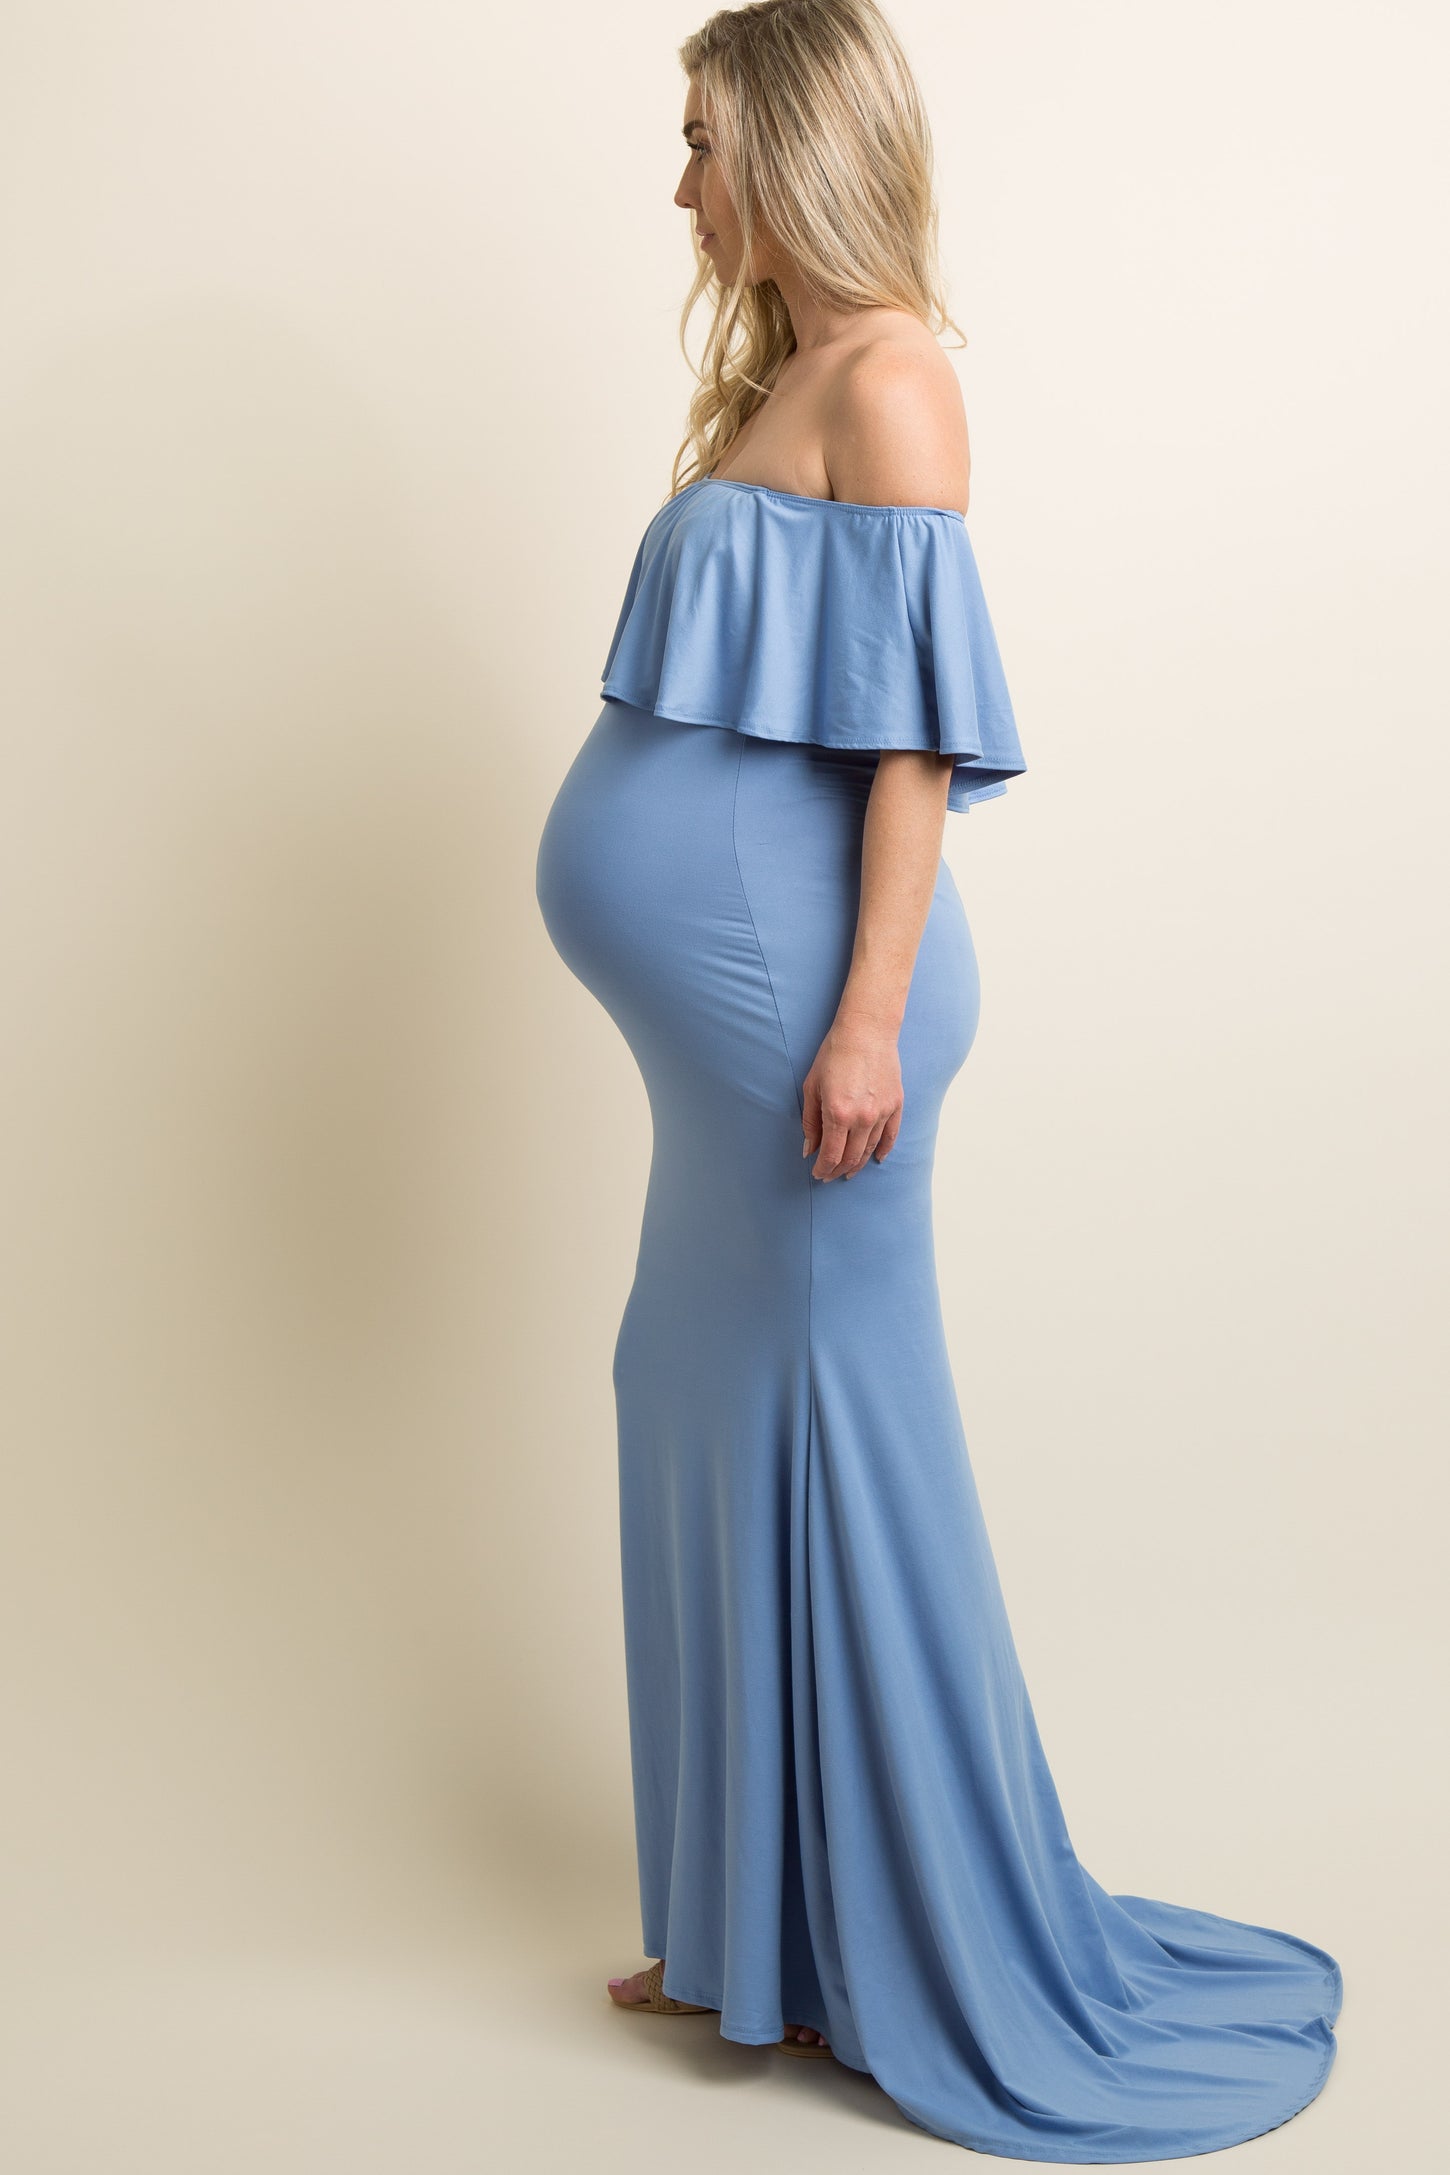 Blue Ruffle Off Shoulder Mermaid Maternity Photoshoot Gown/Dress– PinkBlush